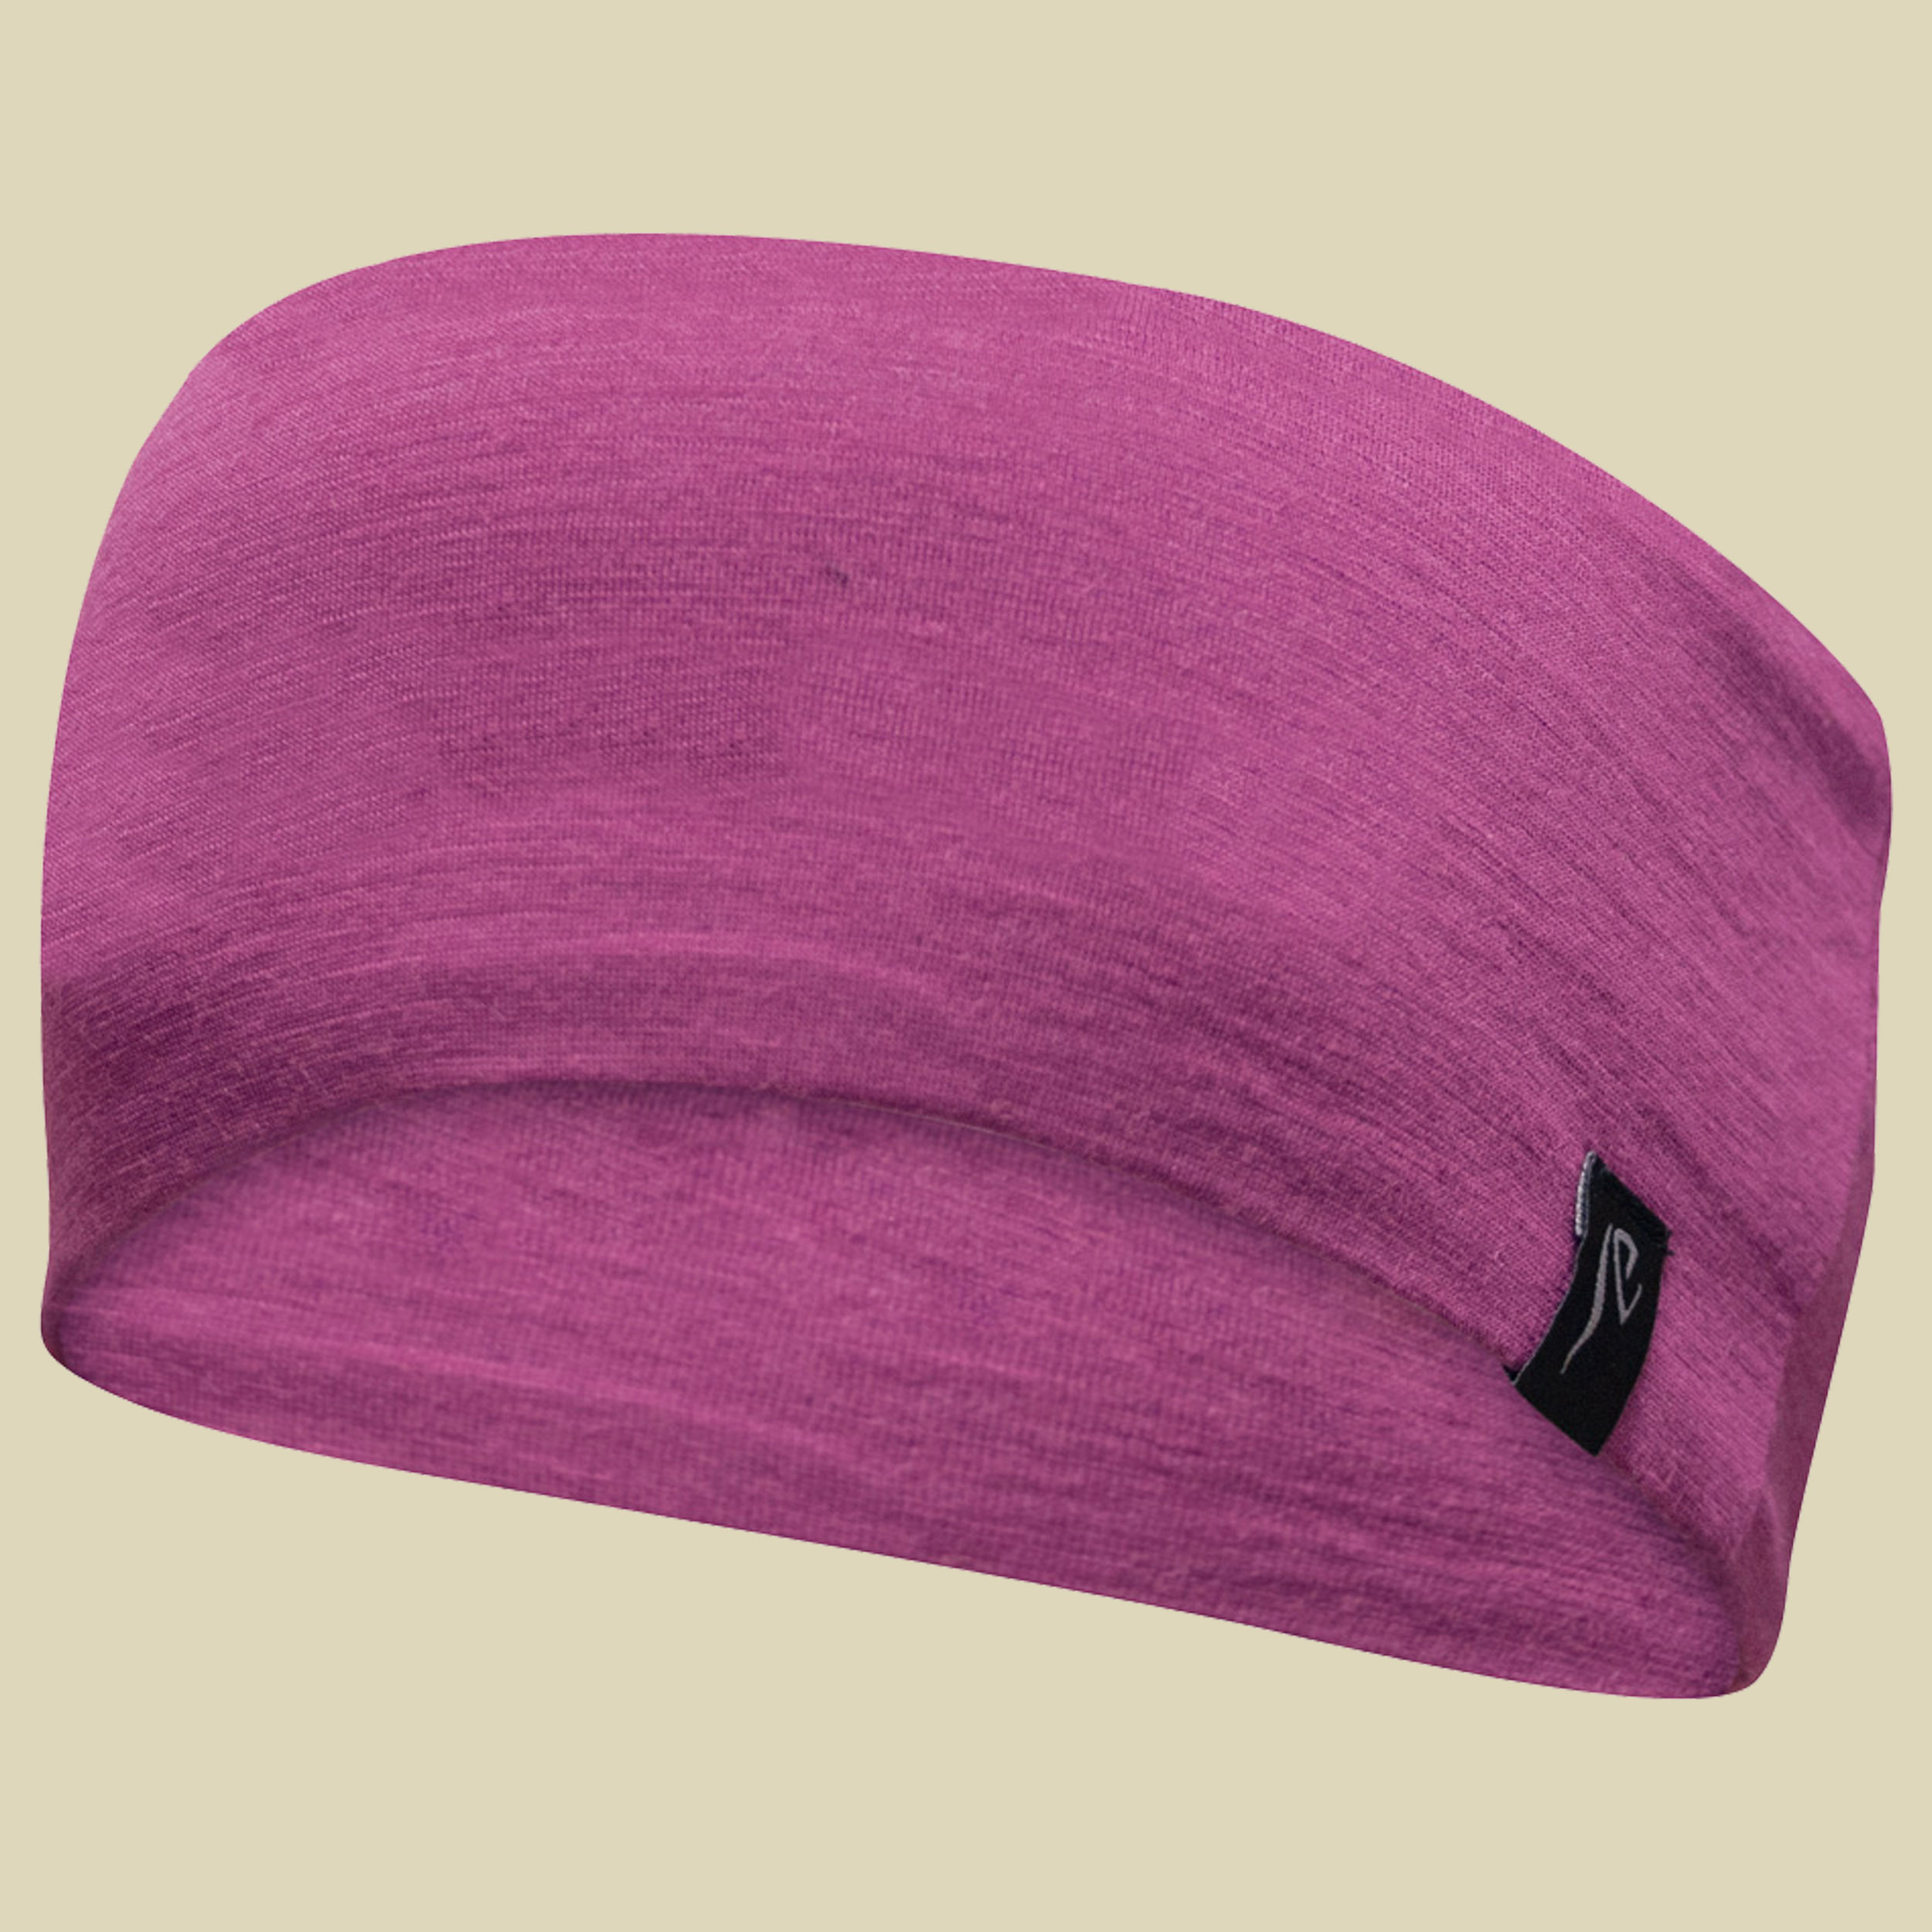 Underwool Headband Größe one size Farbe lilac rose